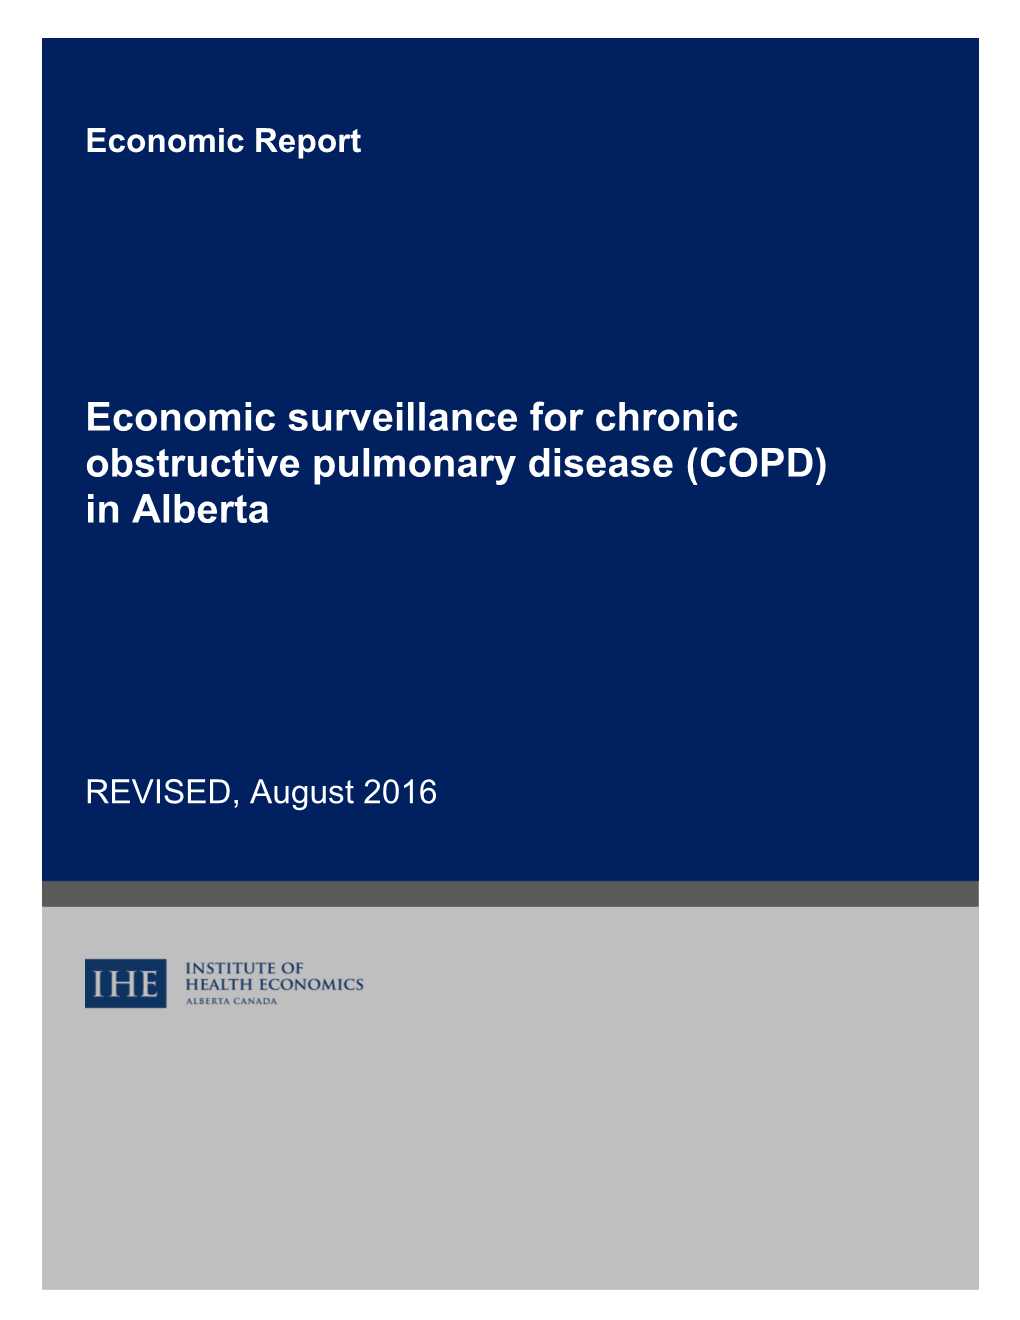 Economic Surveillance for Chronic Obstructive Pulmonary Disease (COPD) in Alberta